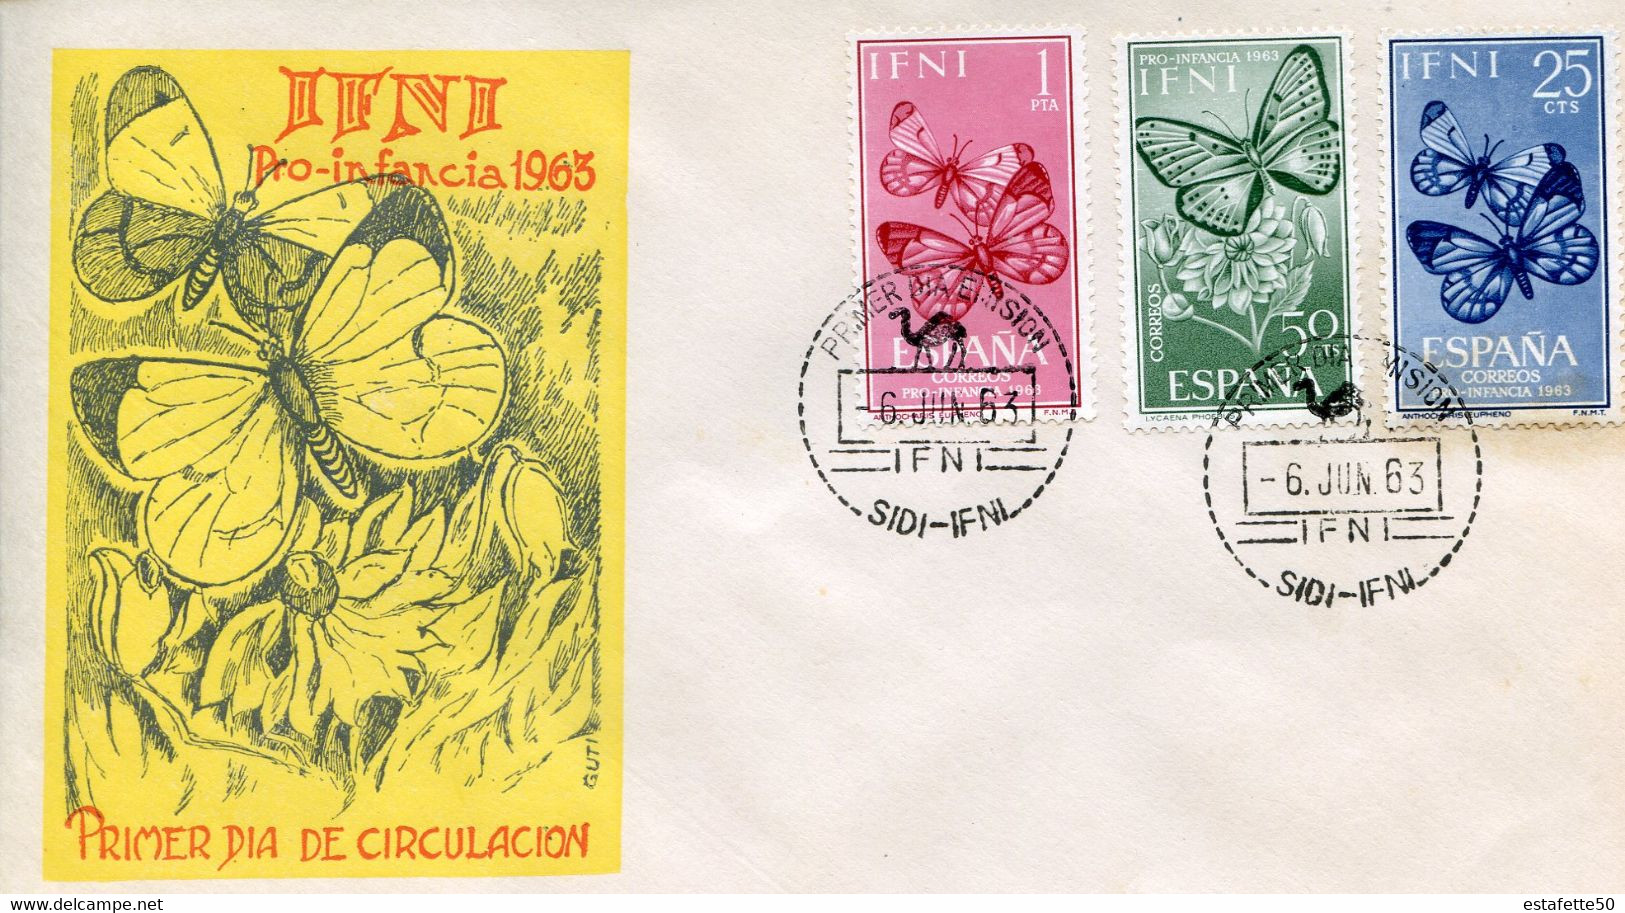 Maroc; Ifni; FDC 1963 " Pro-infancia ,papillons,mariposas "Morocco,Marruecos - Ifni